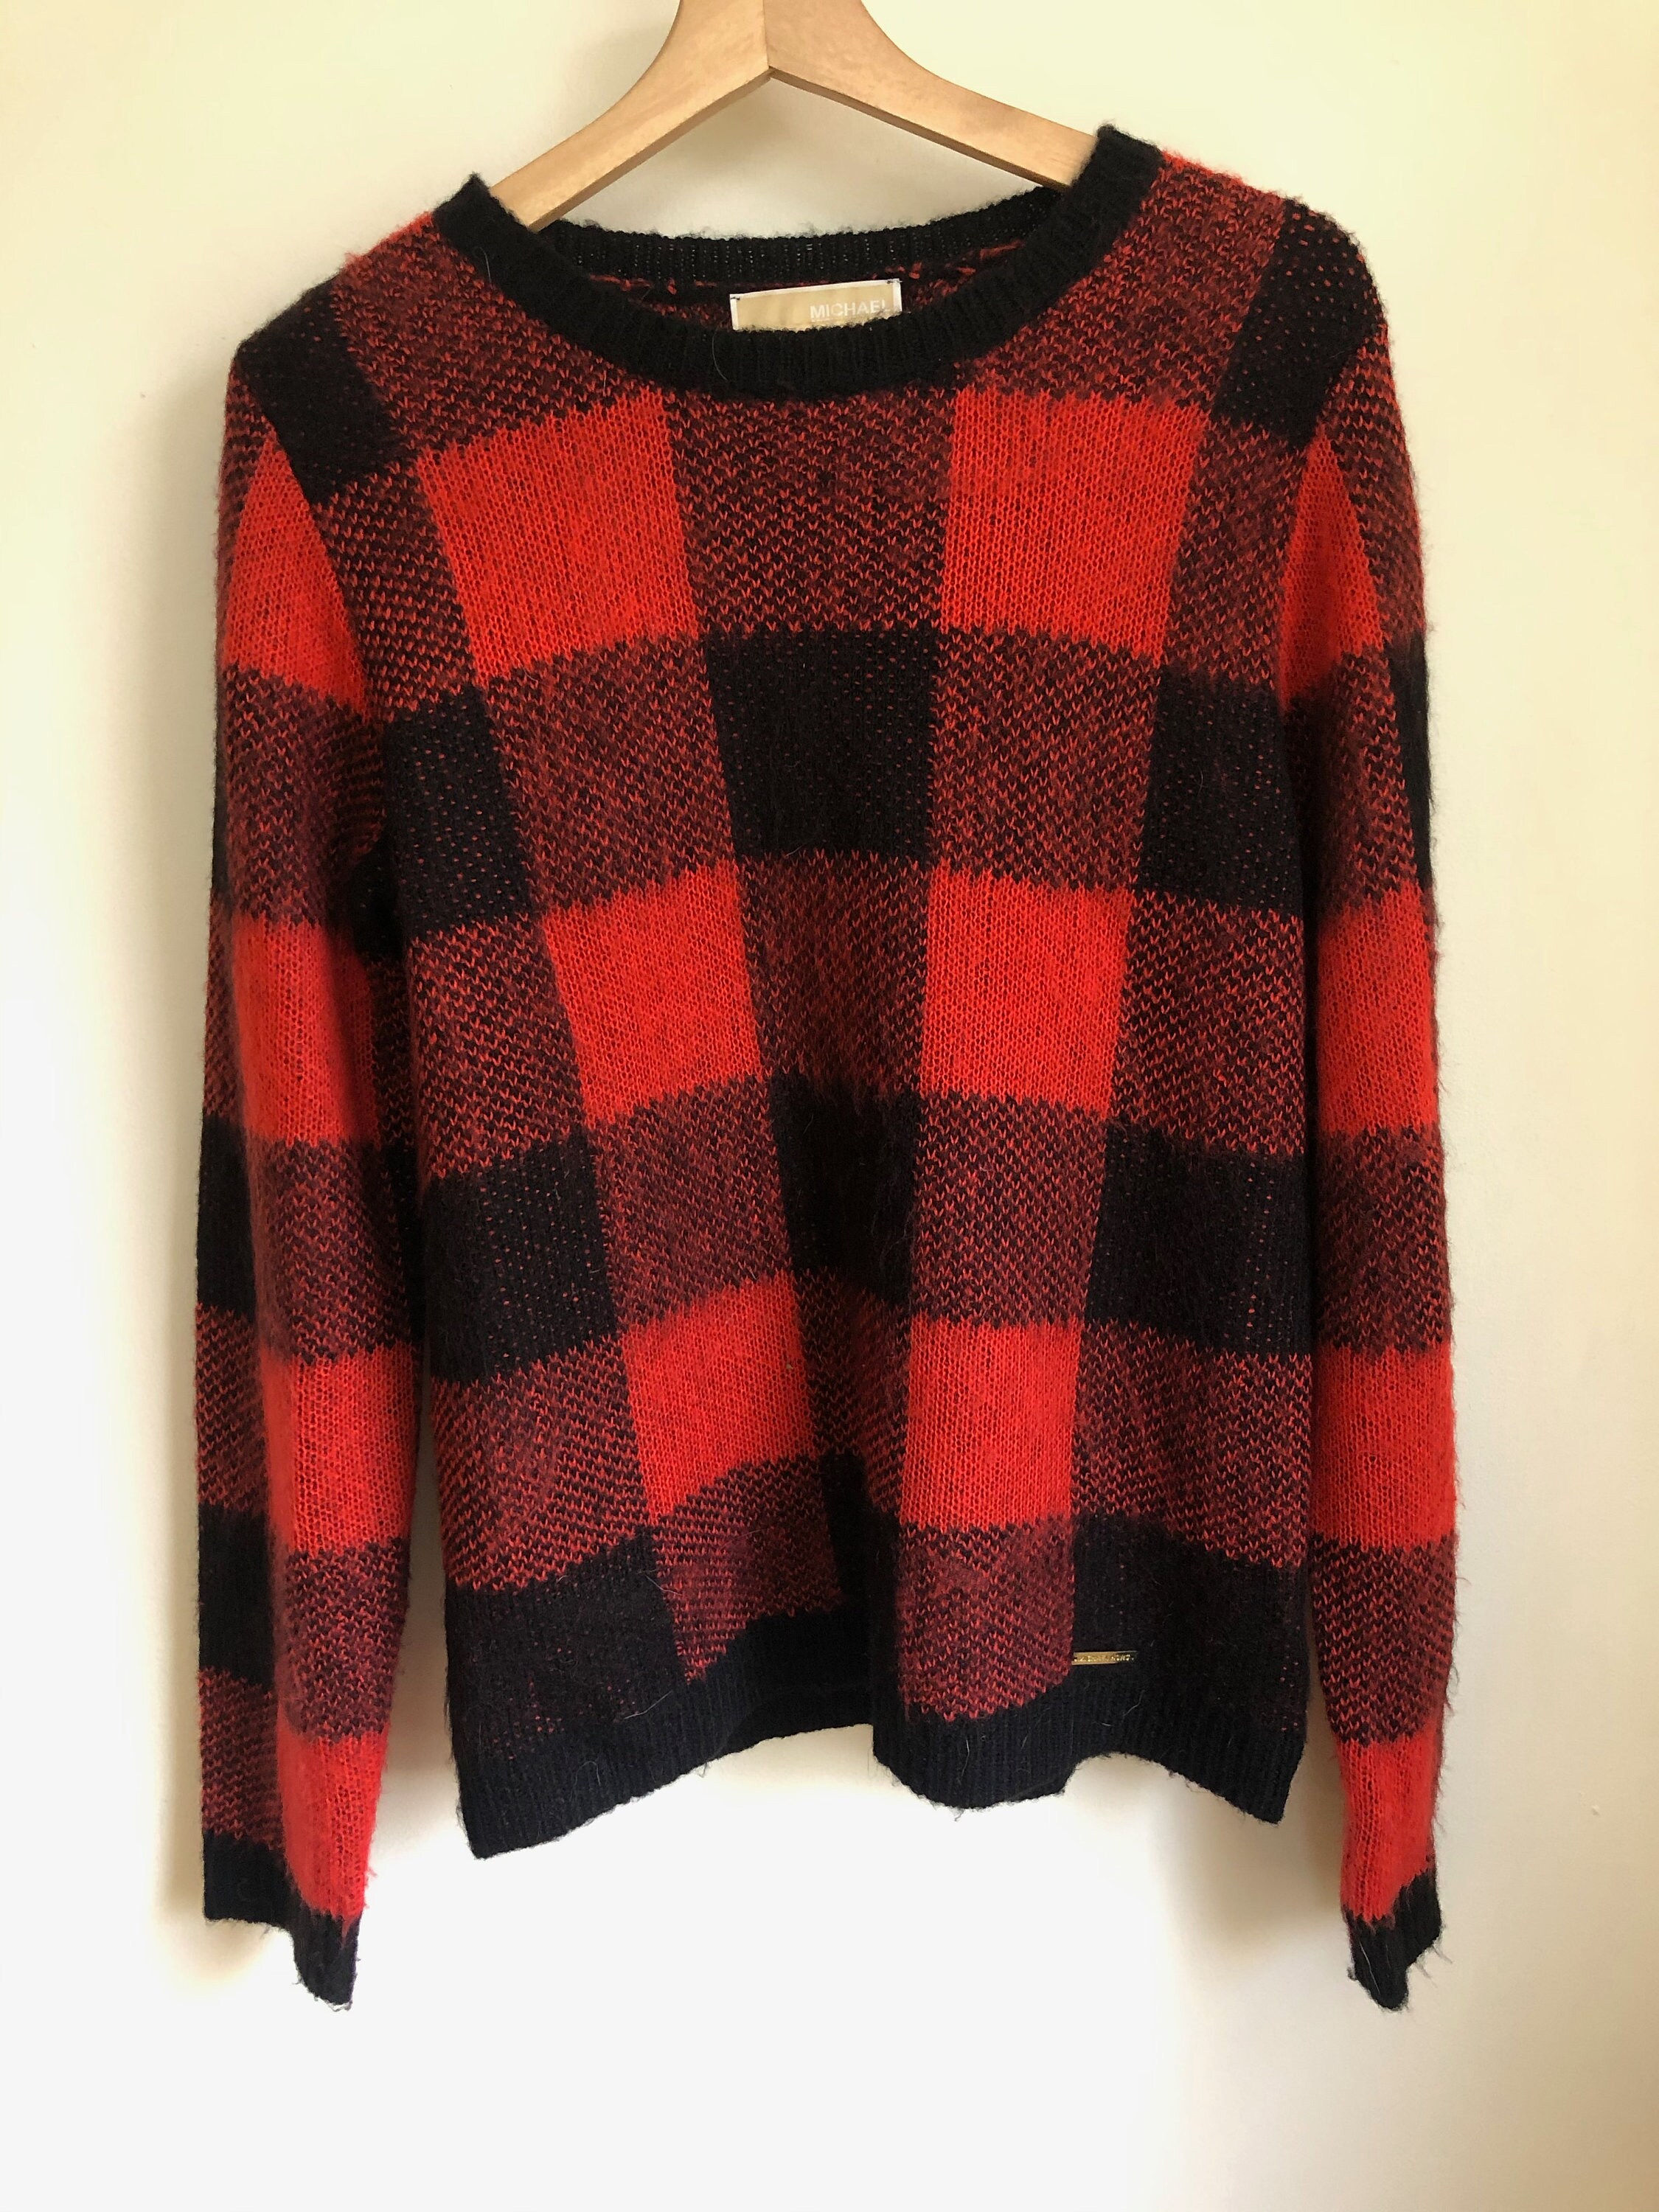 MICHAEL MICHAEL KORS Checkered Red & Black Warm Sweater Long | Etsy